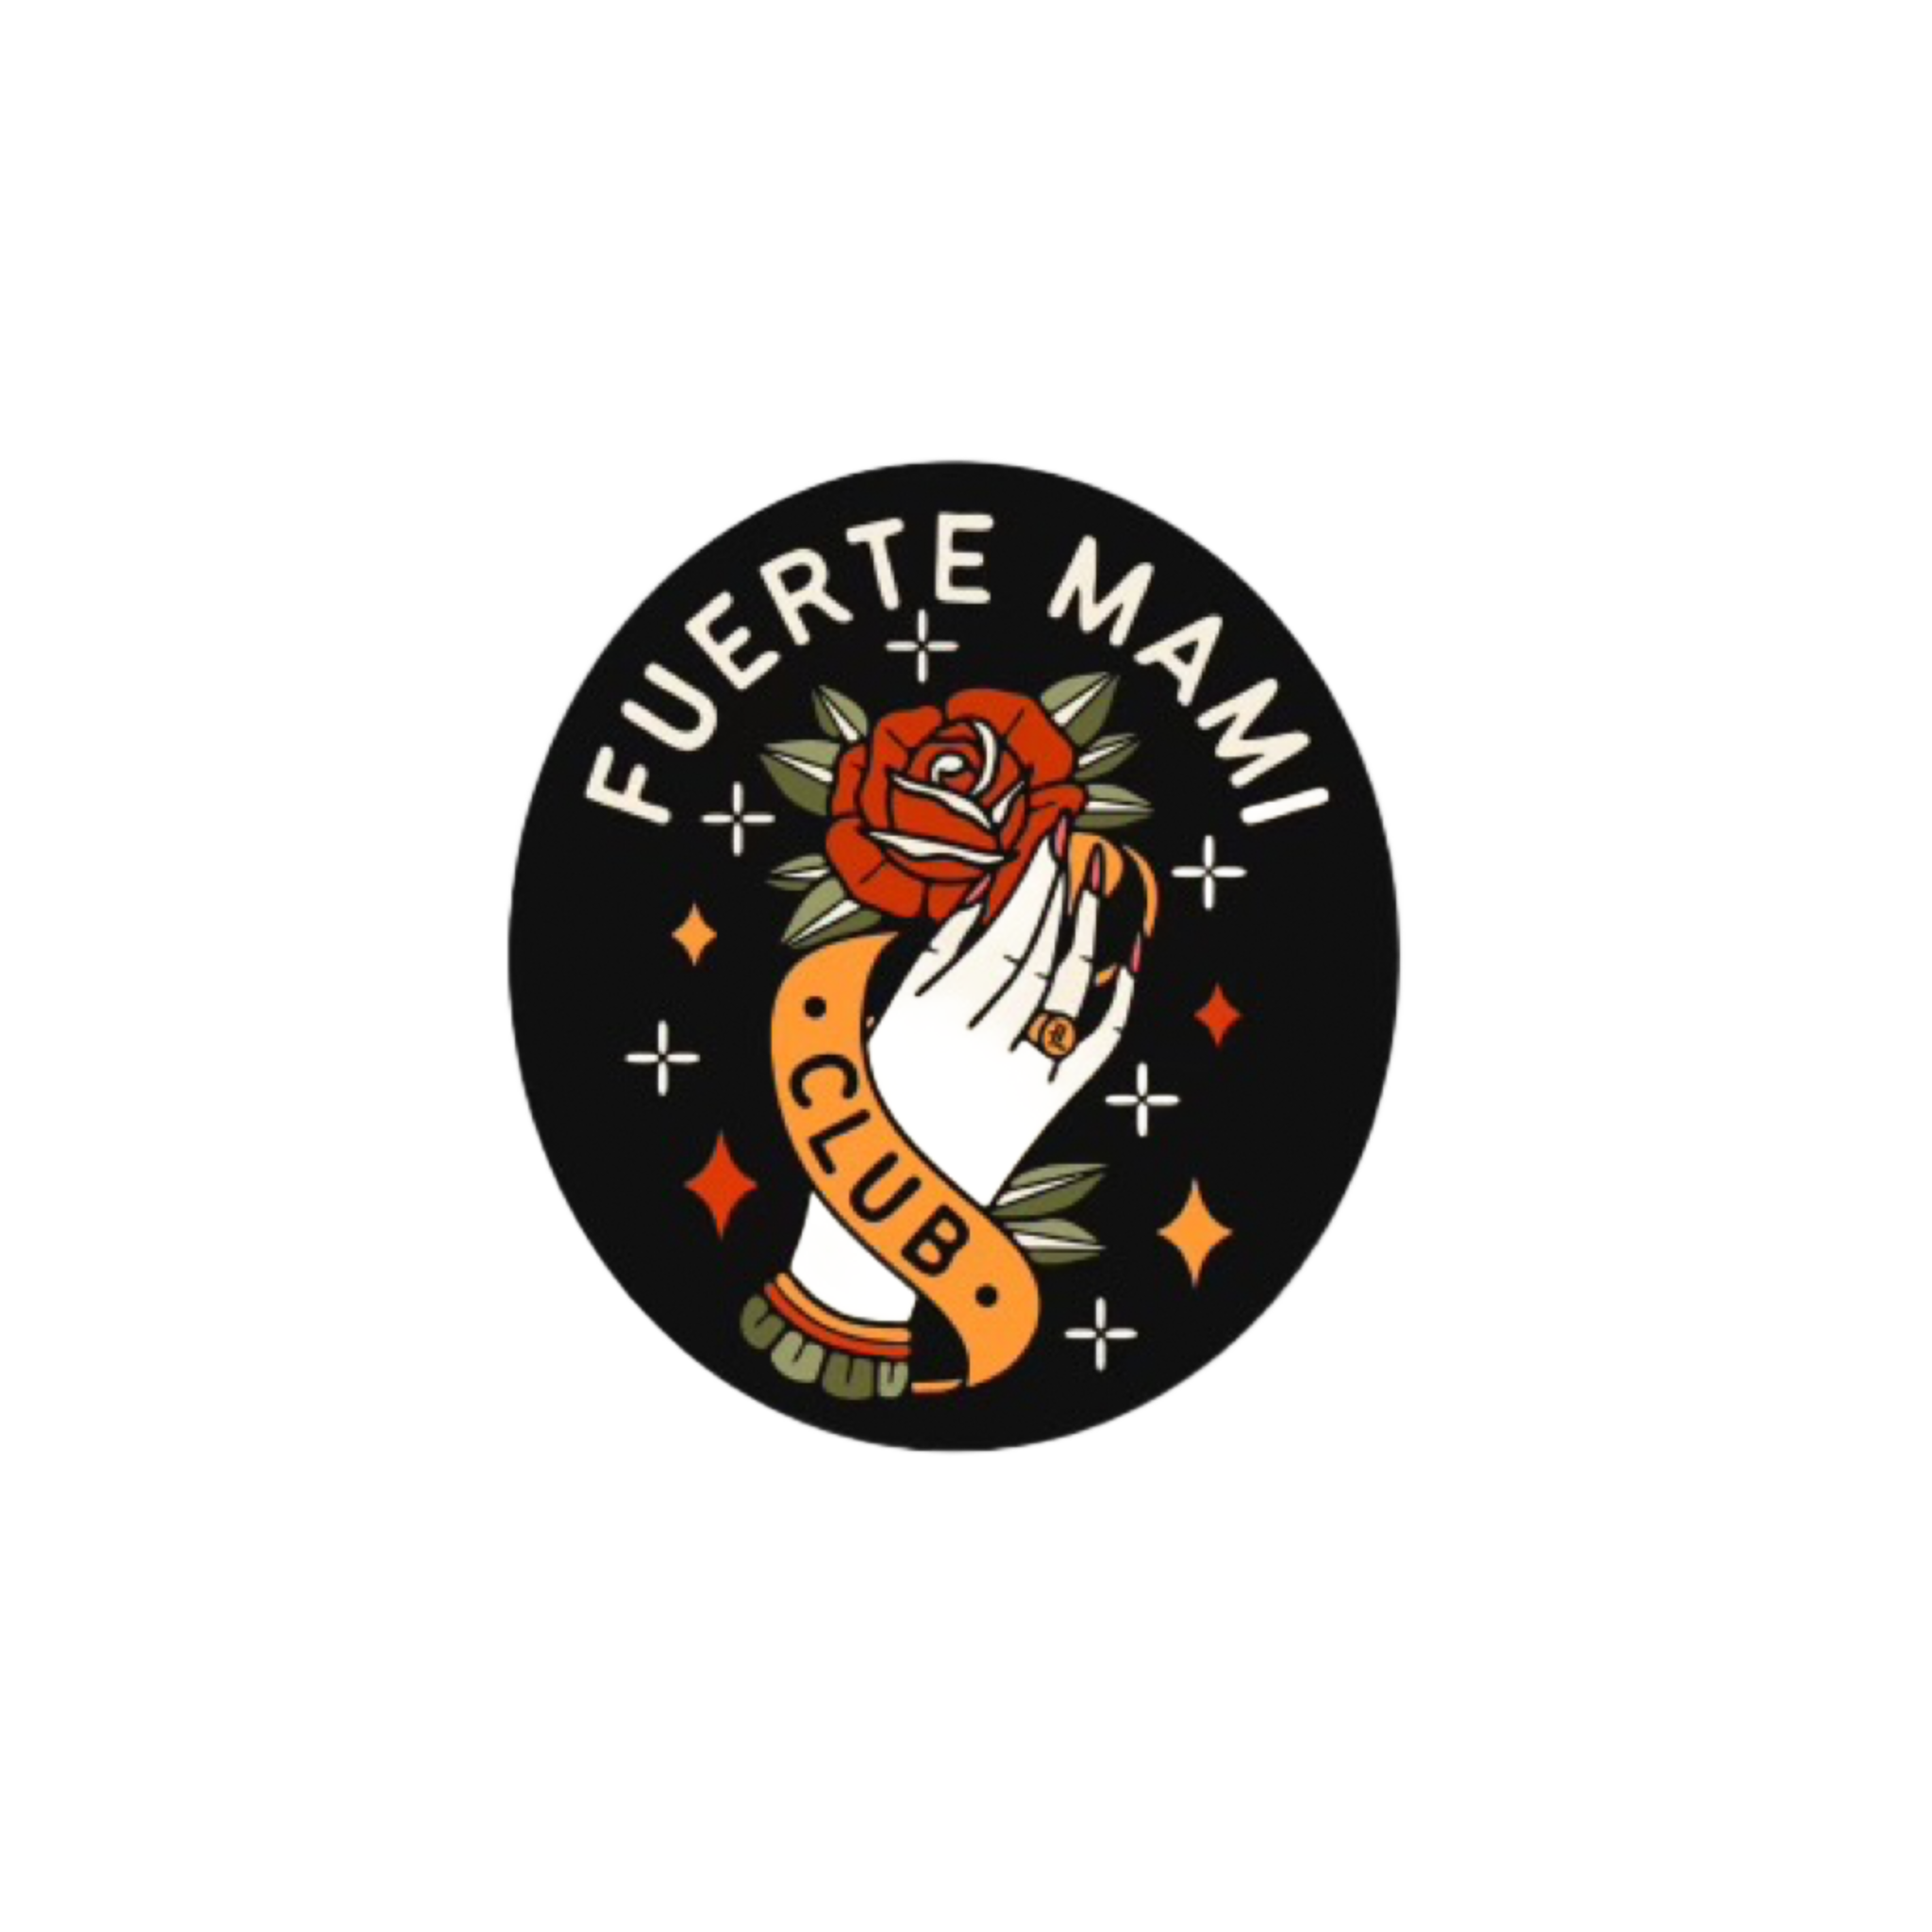 Fuerte mami club sticker - Latina Lifters